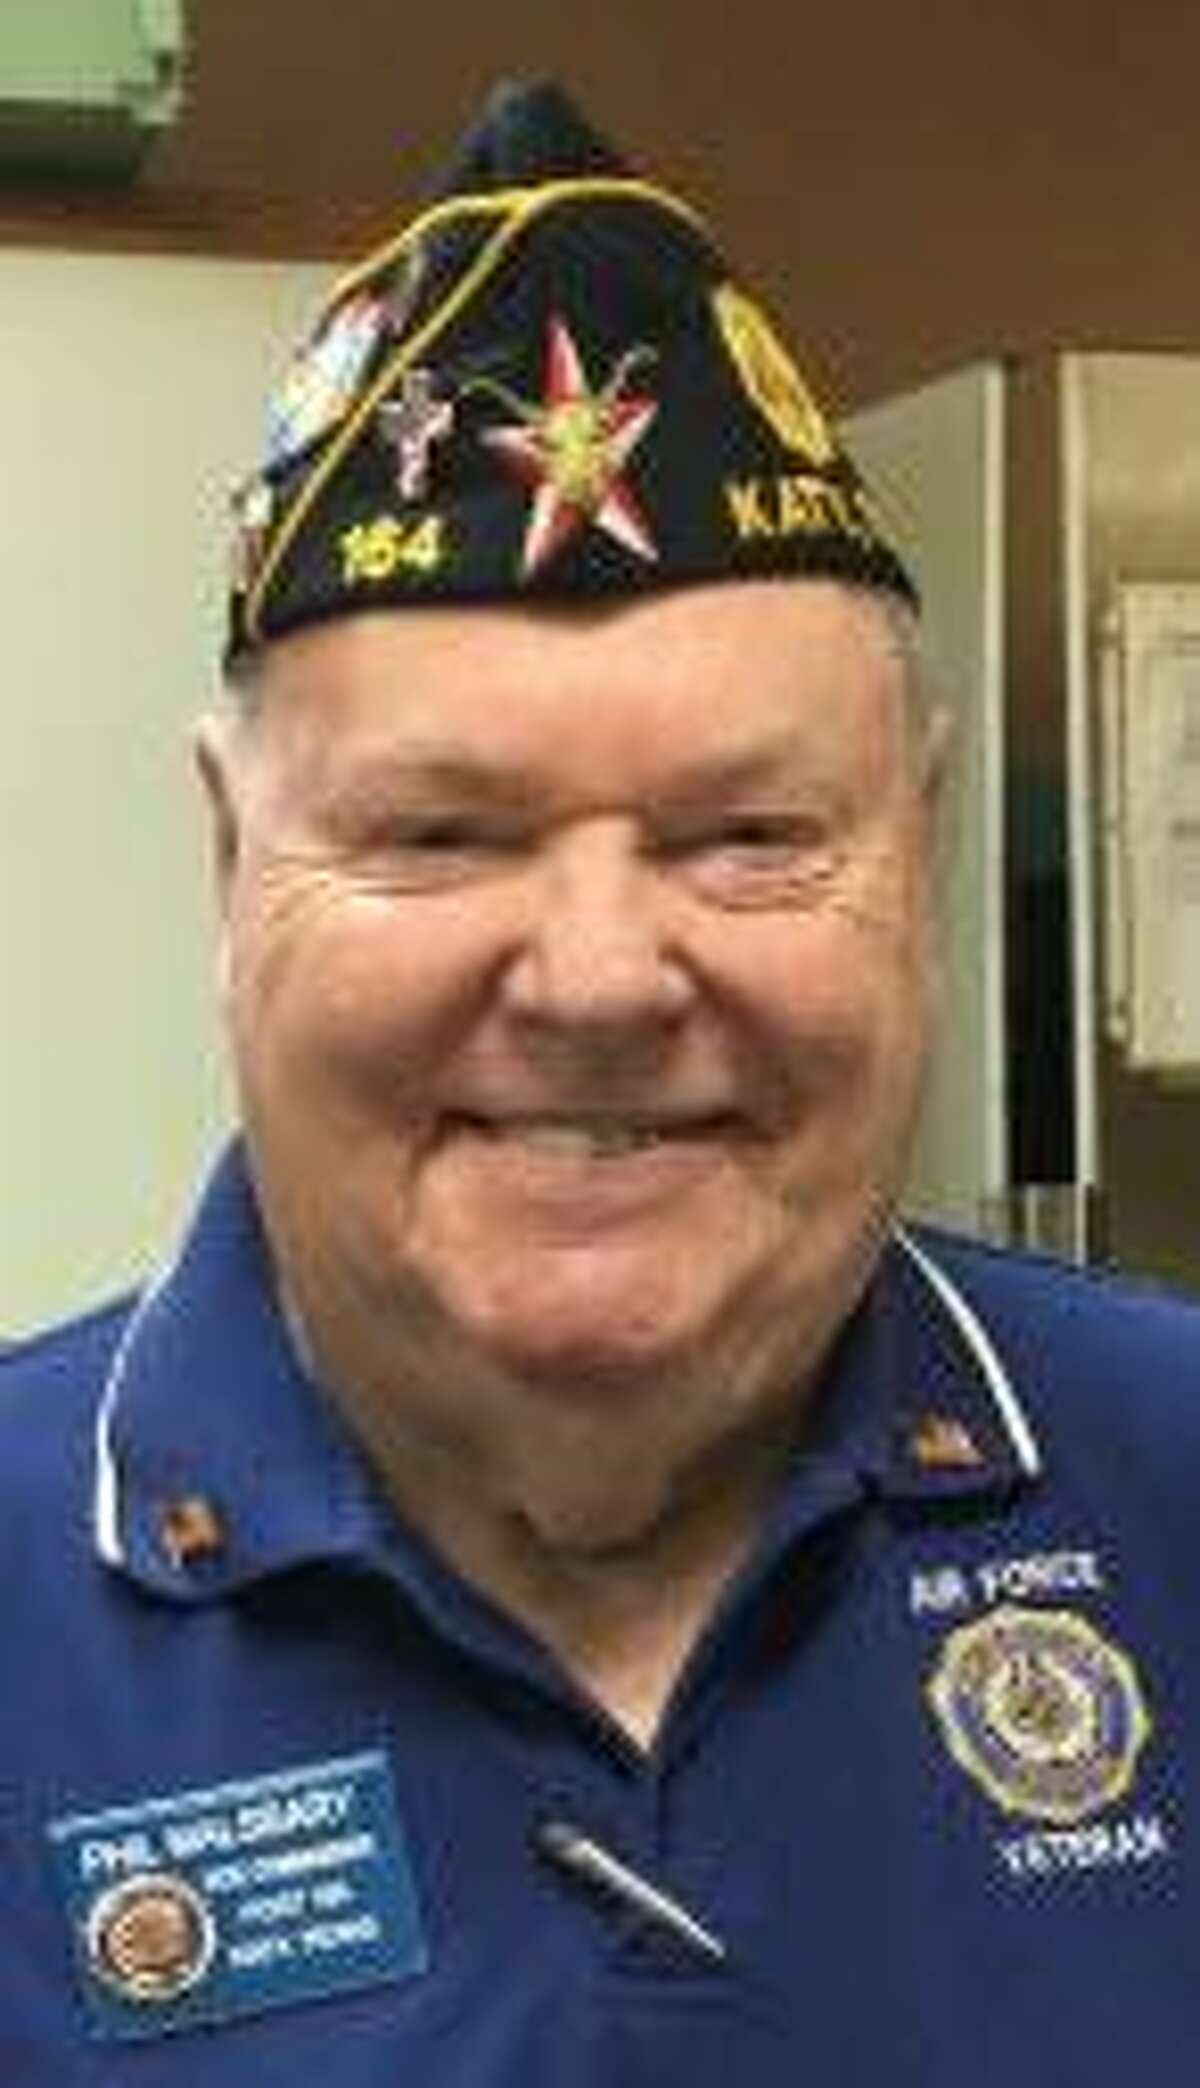 Phil Malsbary is vice commander of American Legion Post 164 Katy.